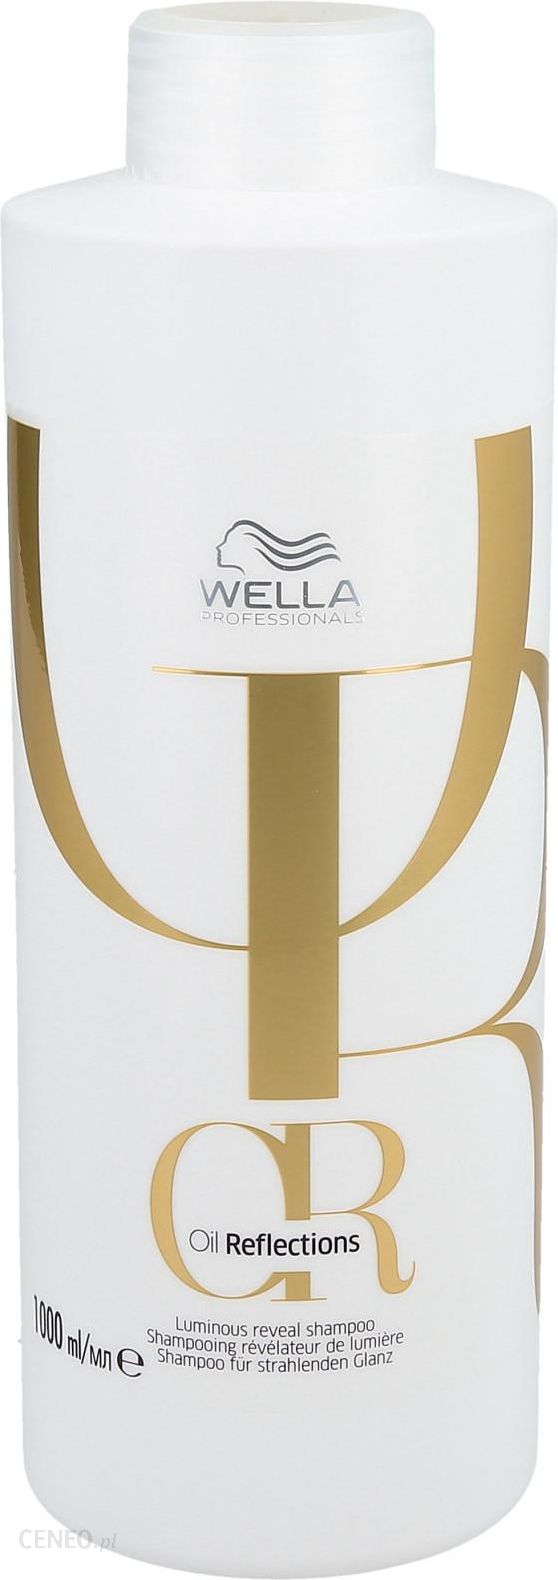 wella oil reflections szampon 1000ml